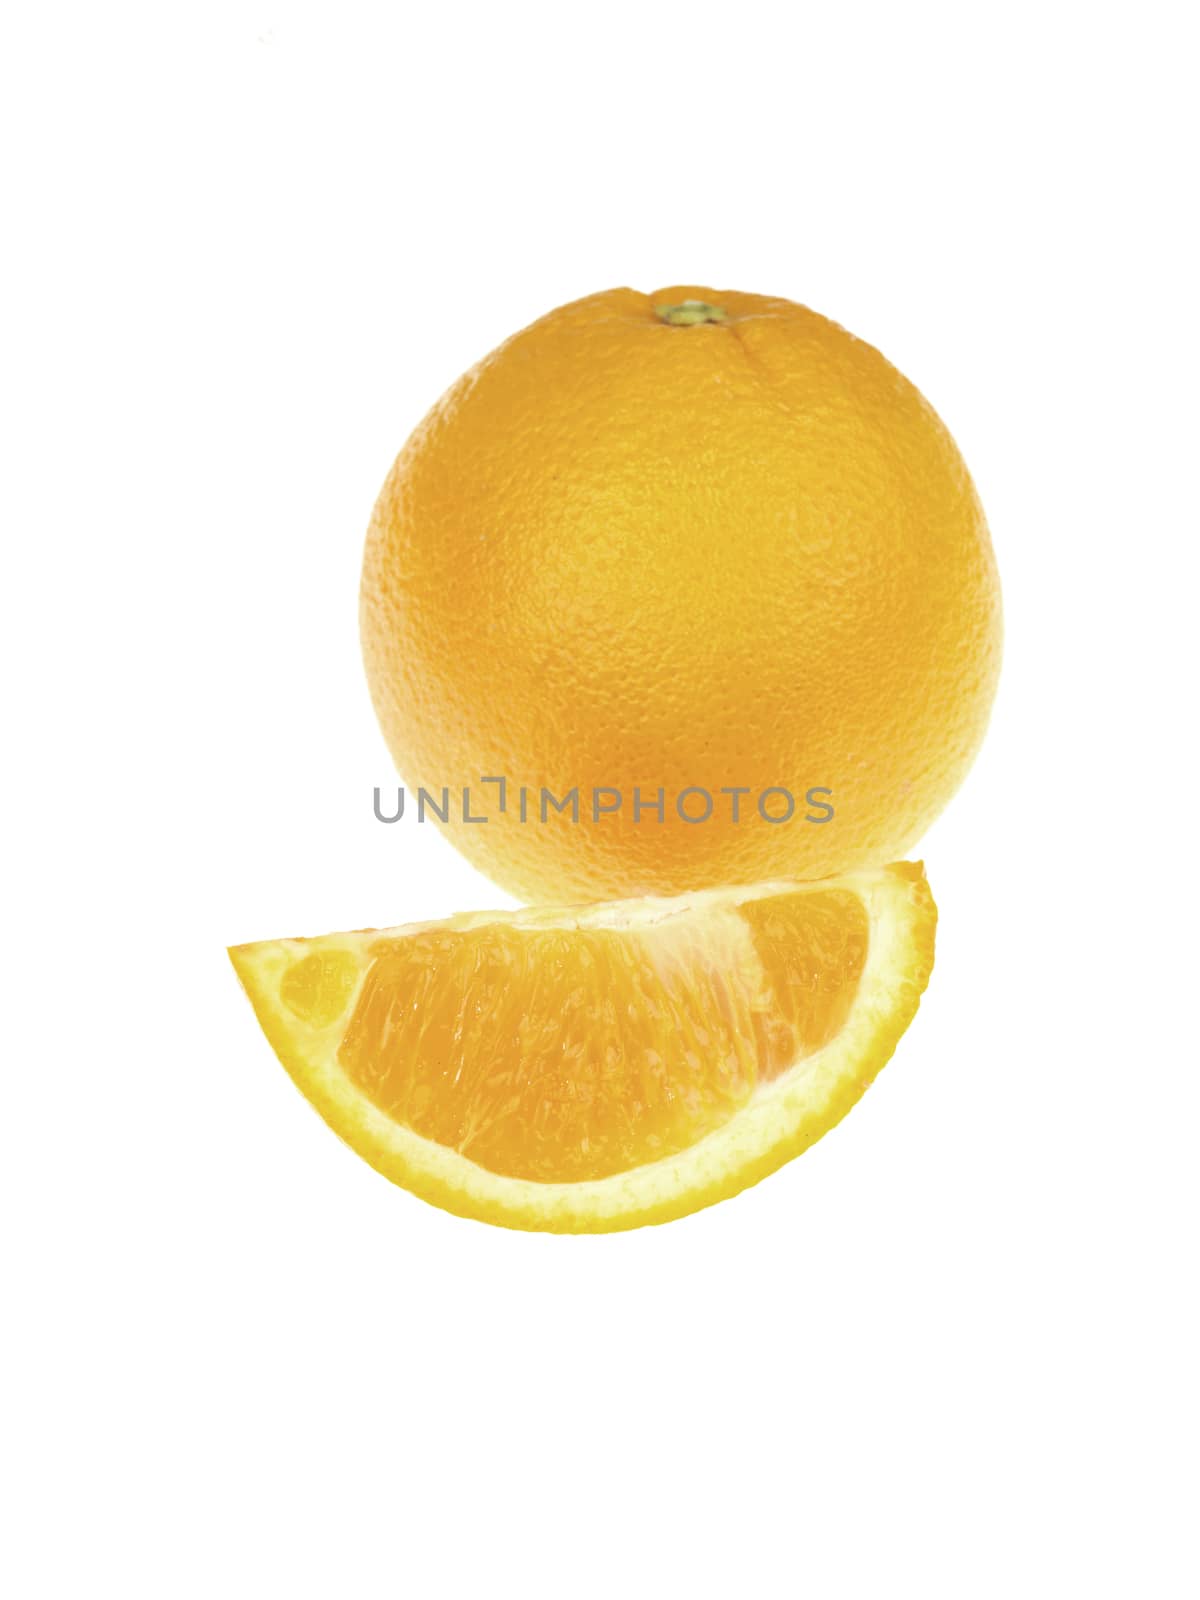 Orange by Whiteboxmedia